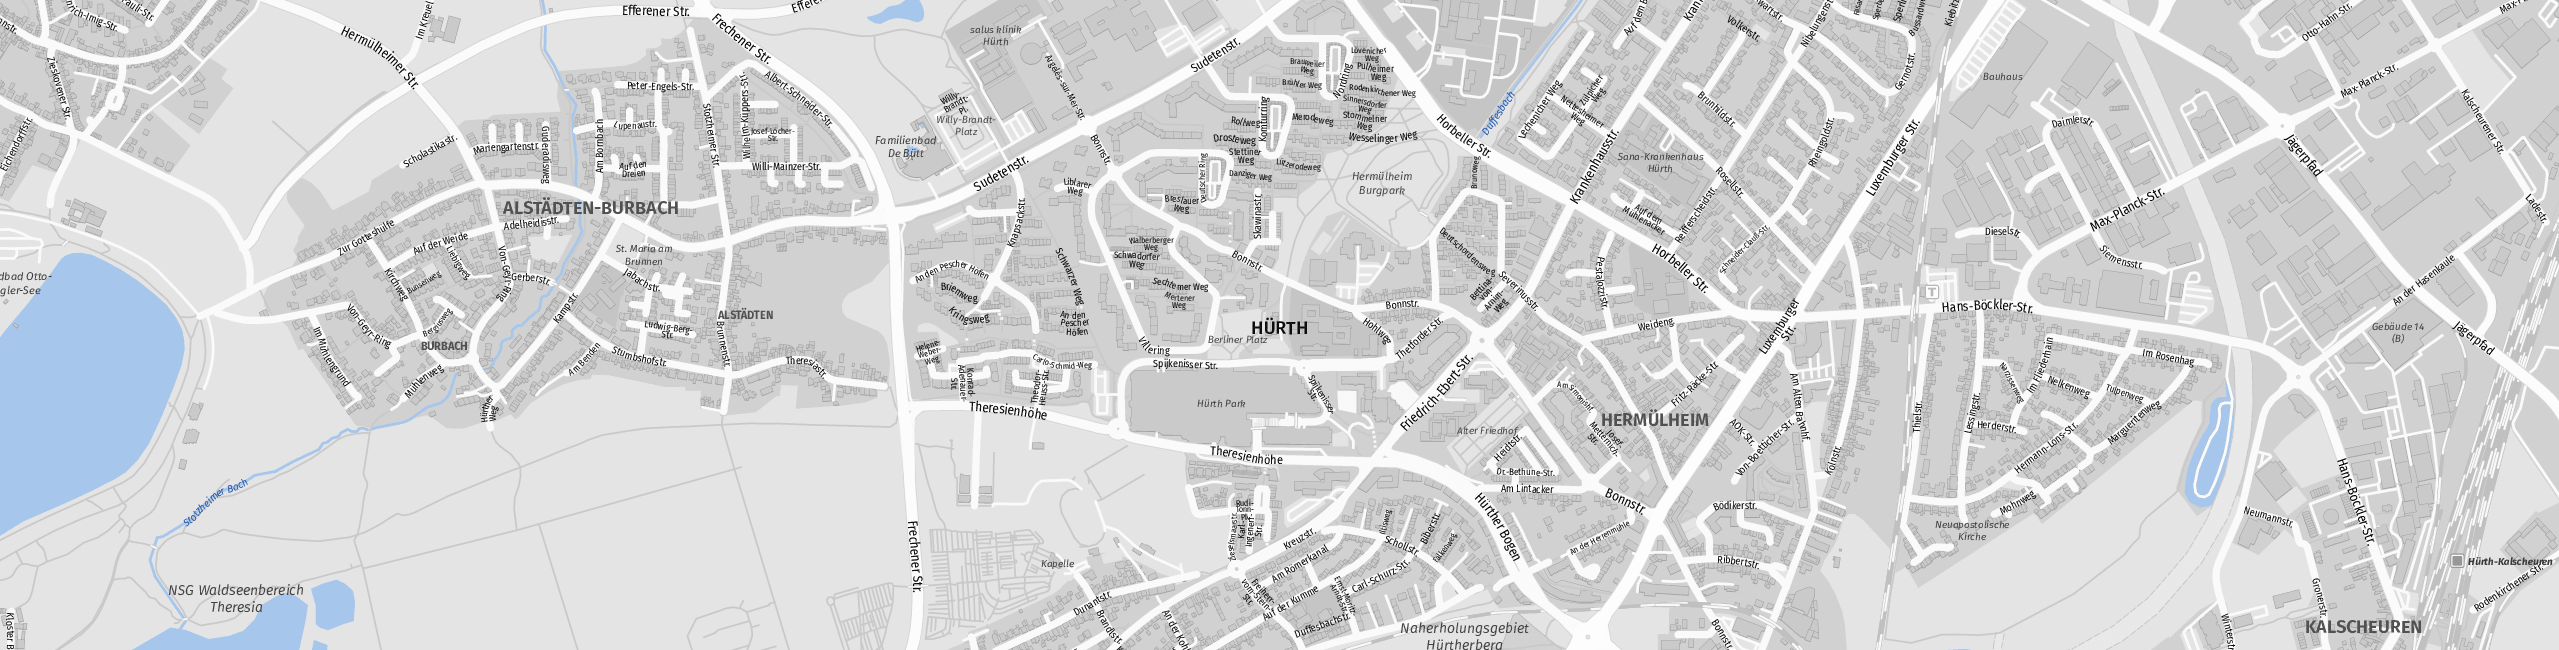 Stadtplan Hürth zum Downloaden.